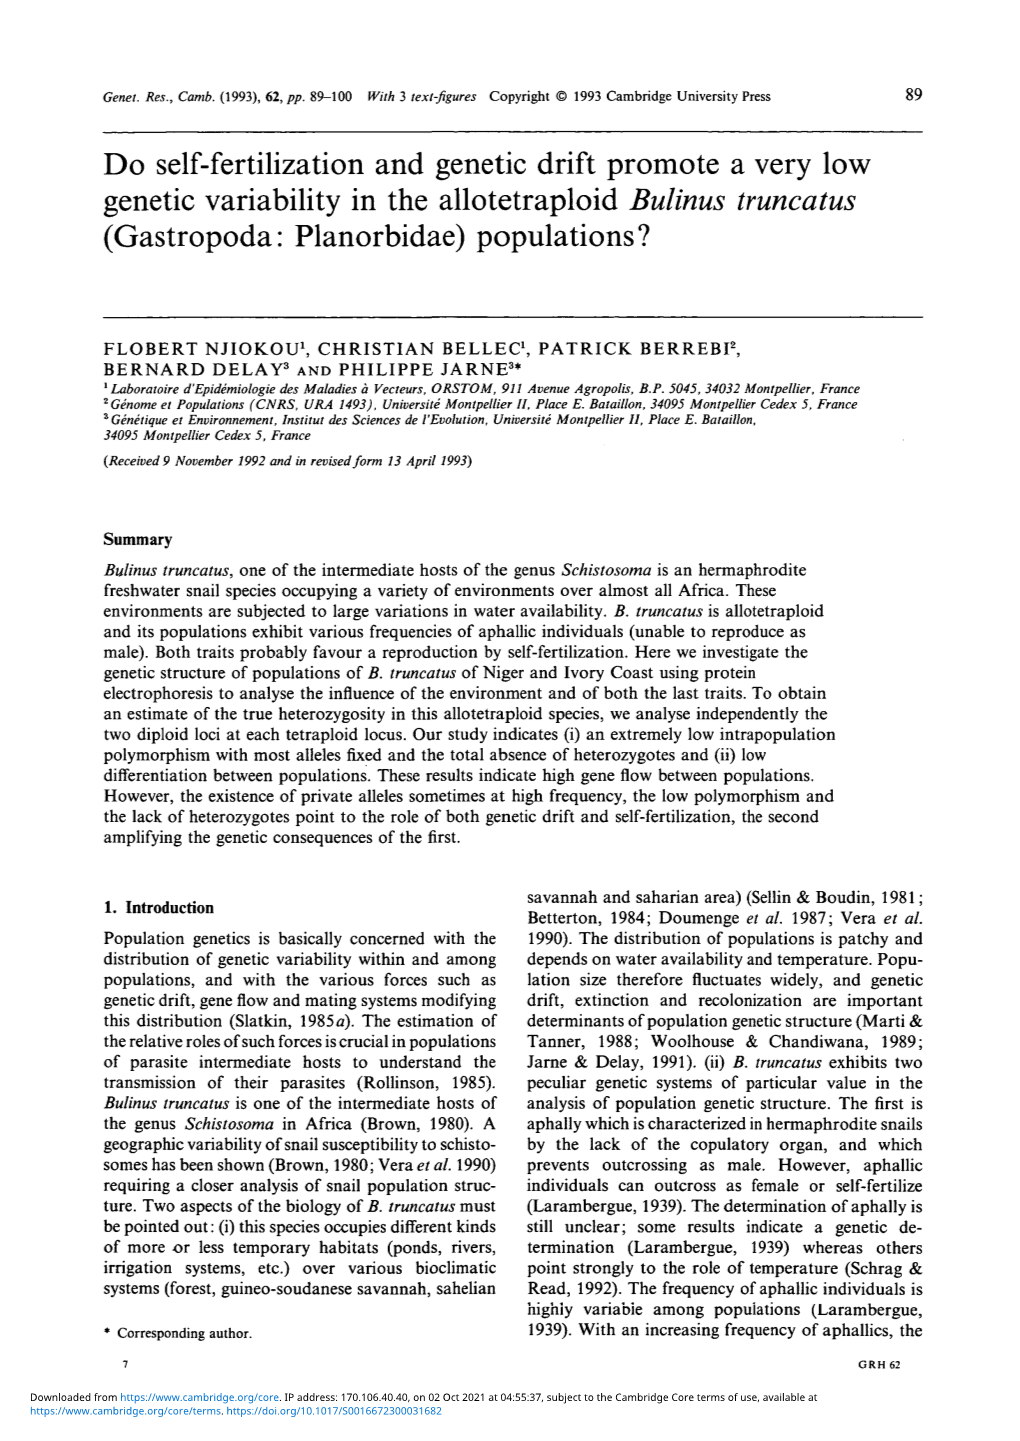 Do Self-Fertilization and Genetic Drift Promote a Very Low Genetic Variability in the Allotetraploid Bulinus Truncatus (Gastropoda: Planorbidae) Populations?